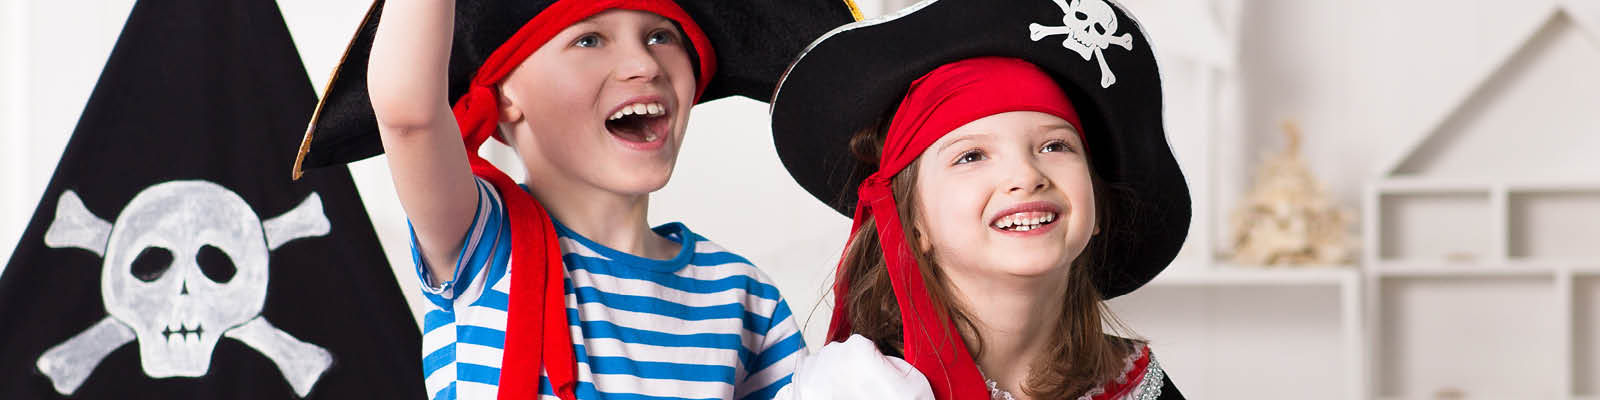 Pirate costumes for children